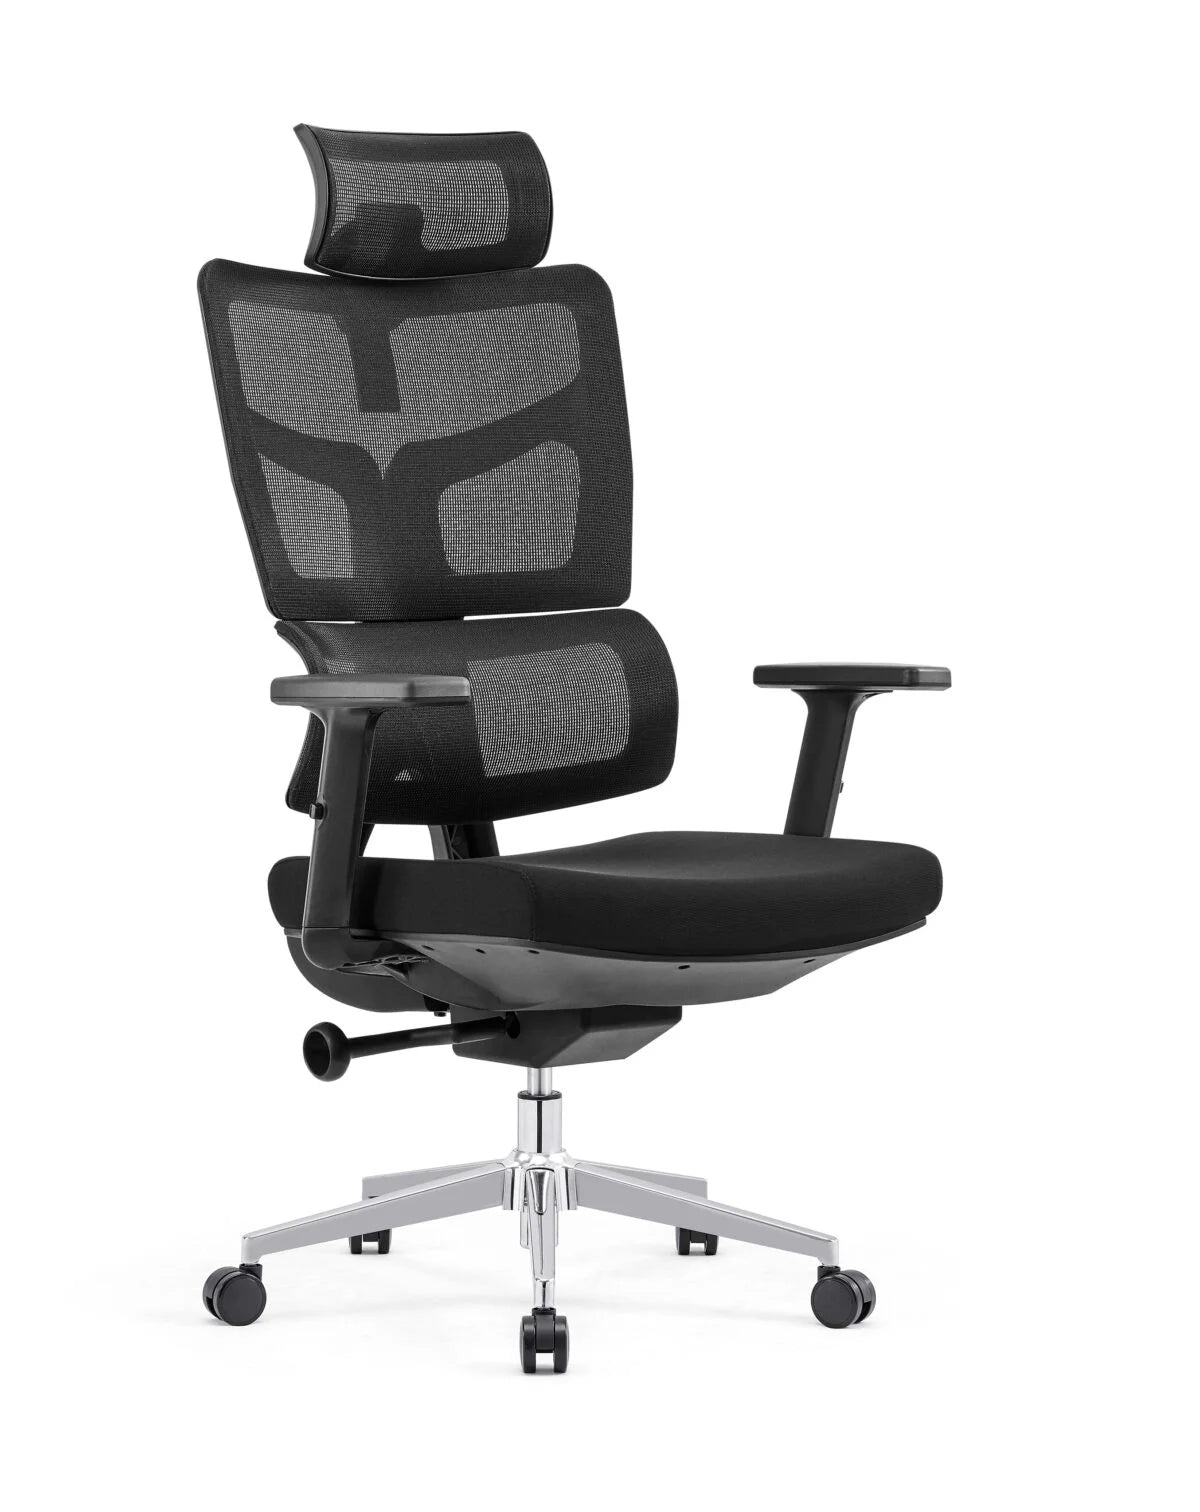 Space Mesh Executive Ergonomic Desk Chair With Headrest @HOG furniture.